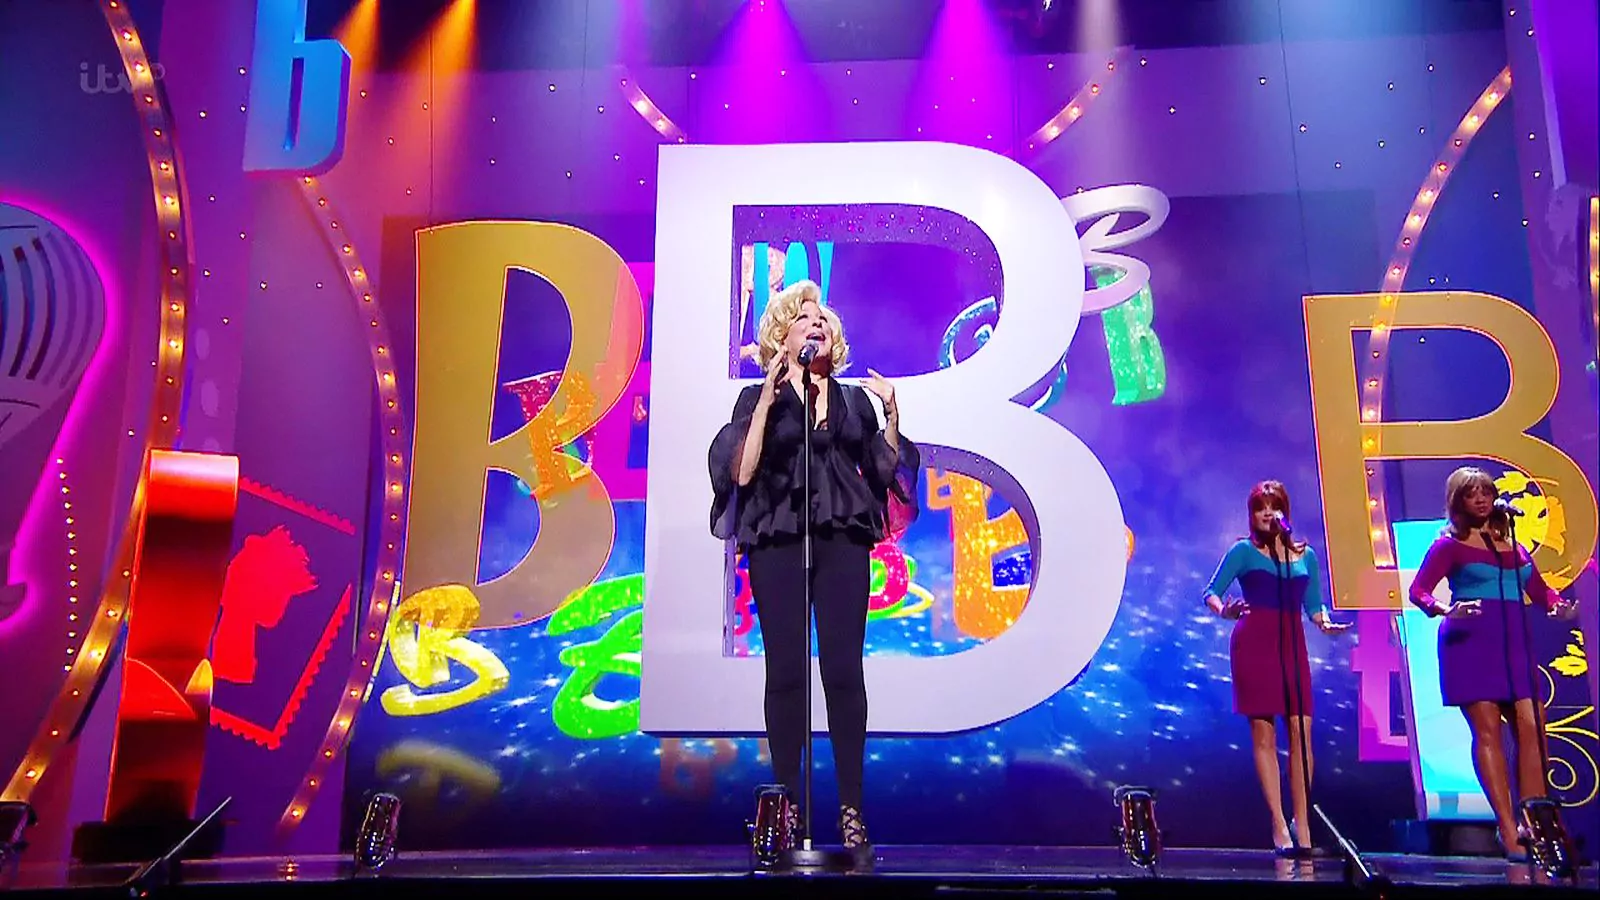 Бетт Мидлер исполняет песню «Be My Baby» на шоу «Royal Variety Performance 2014», 17 декабря 2014 г.